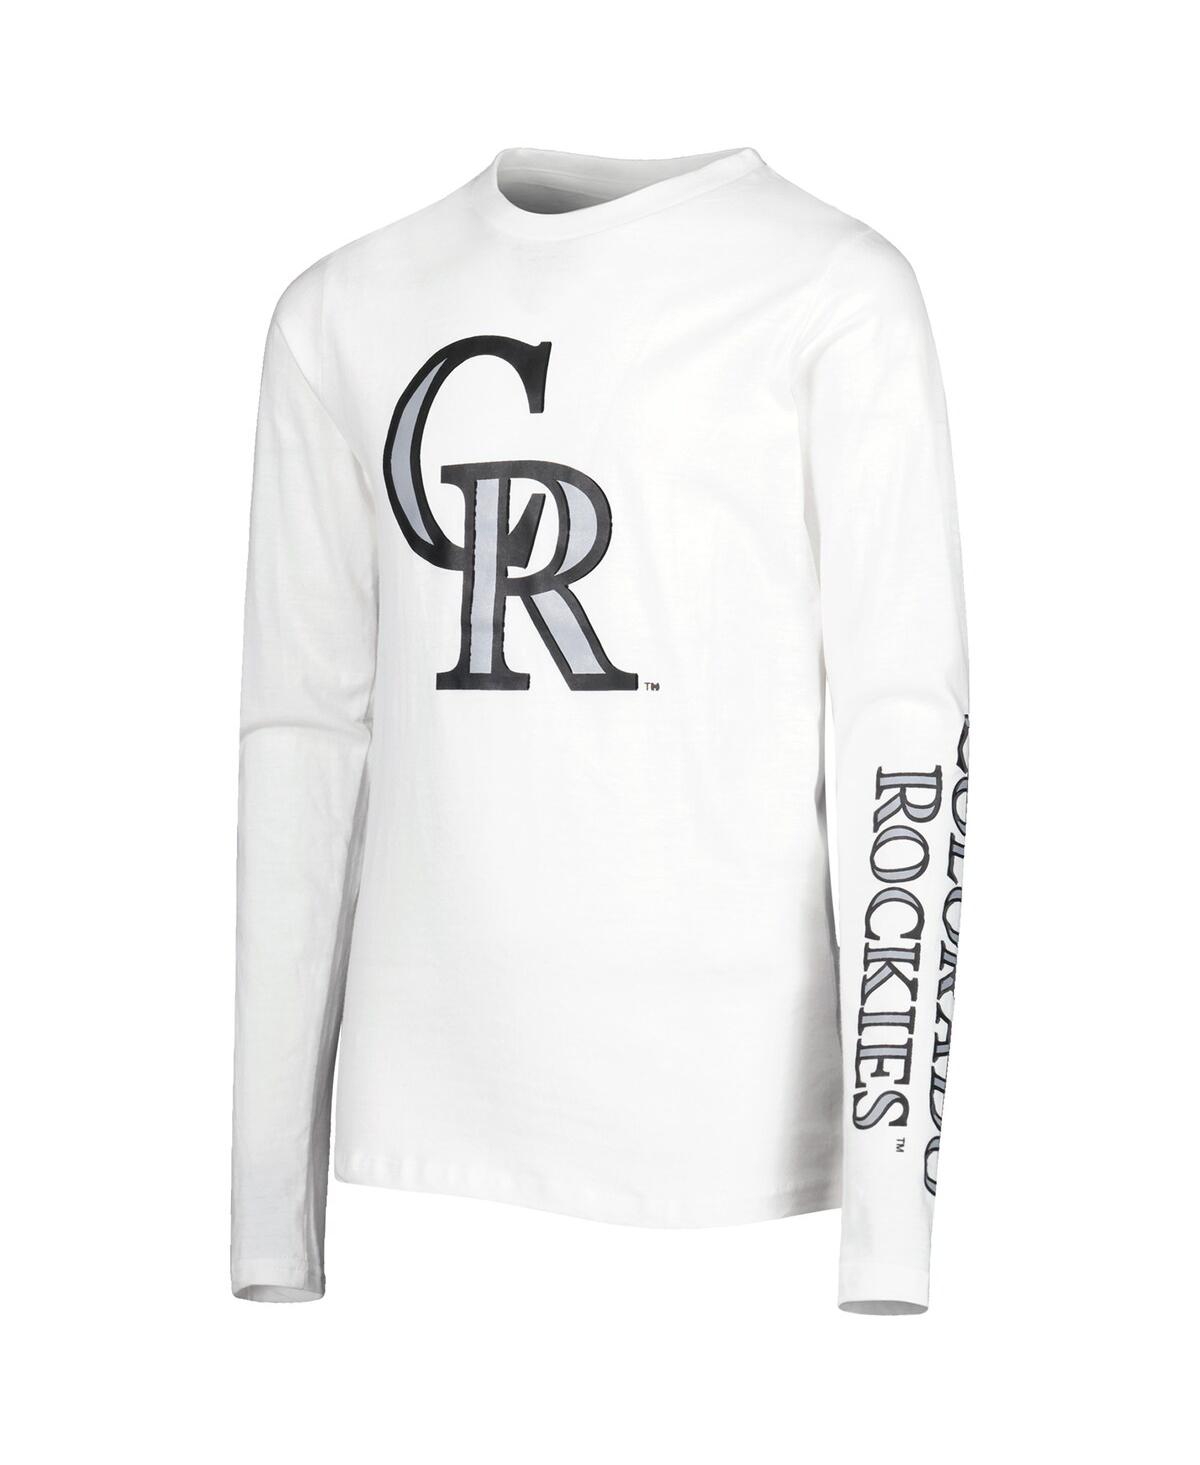 Colorado Rockies Youth V-Neck T-Shirt - White/Black